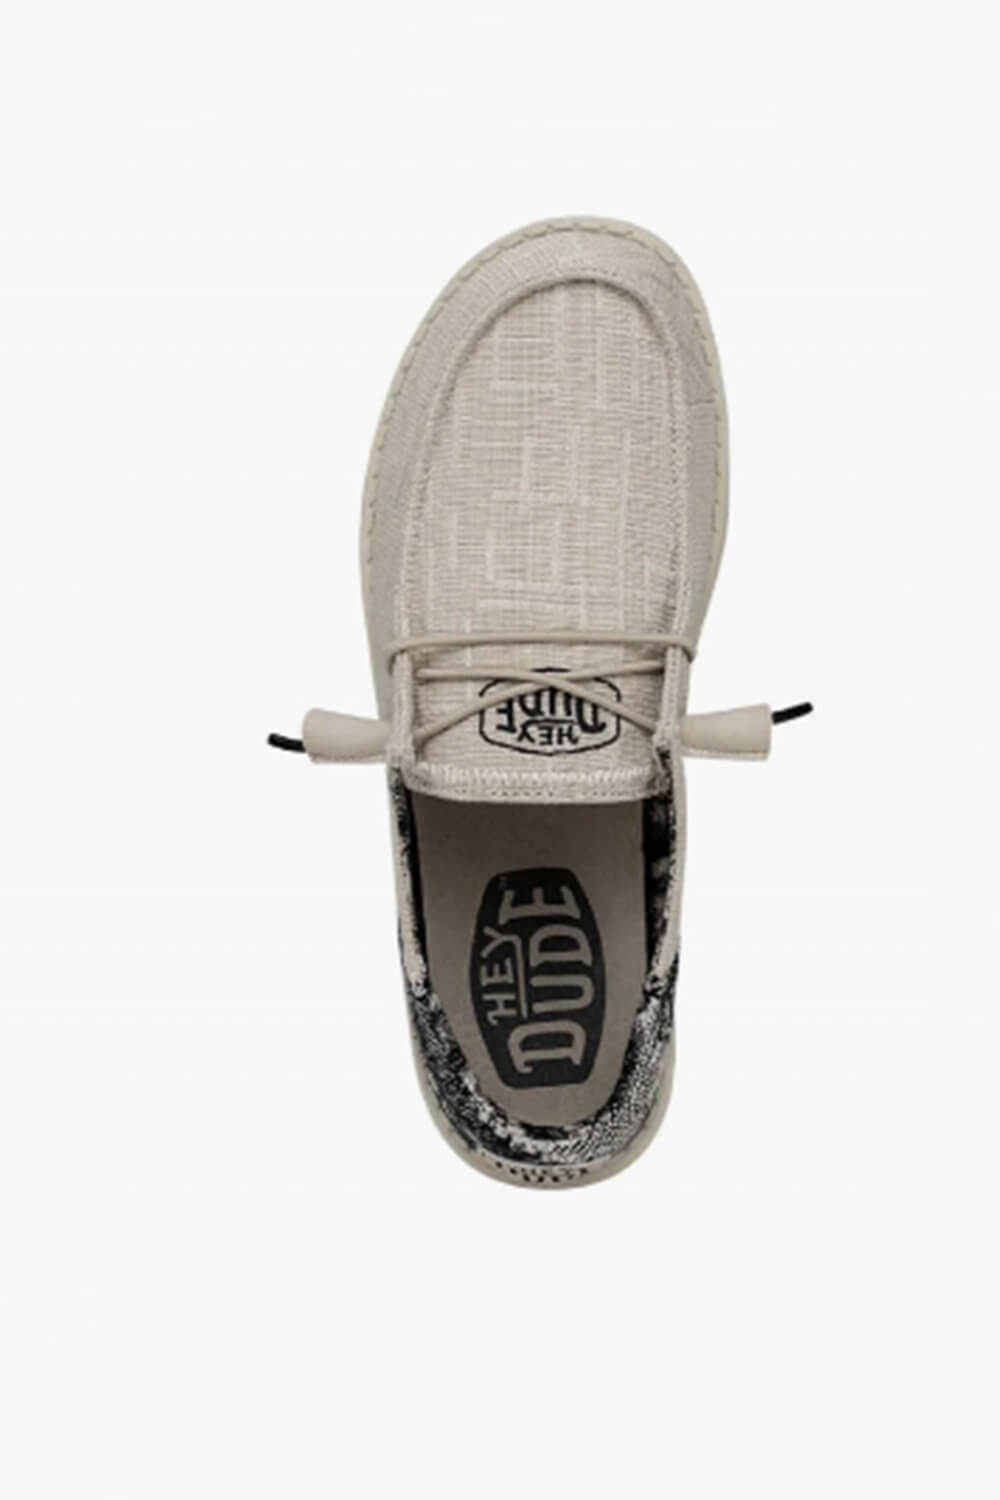 HEYDUDE Women's Wendy Shoes in Chambray Beige – Glik's